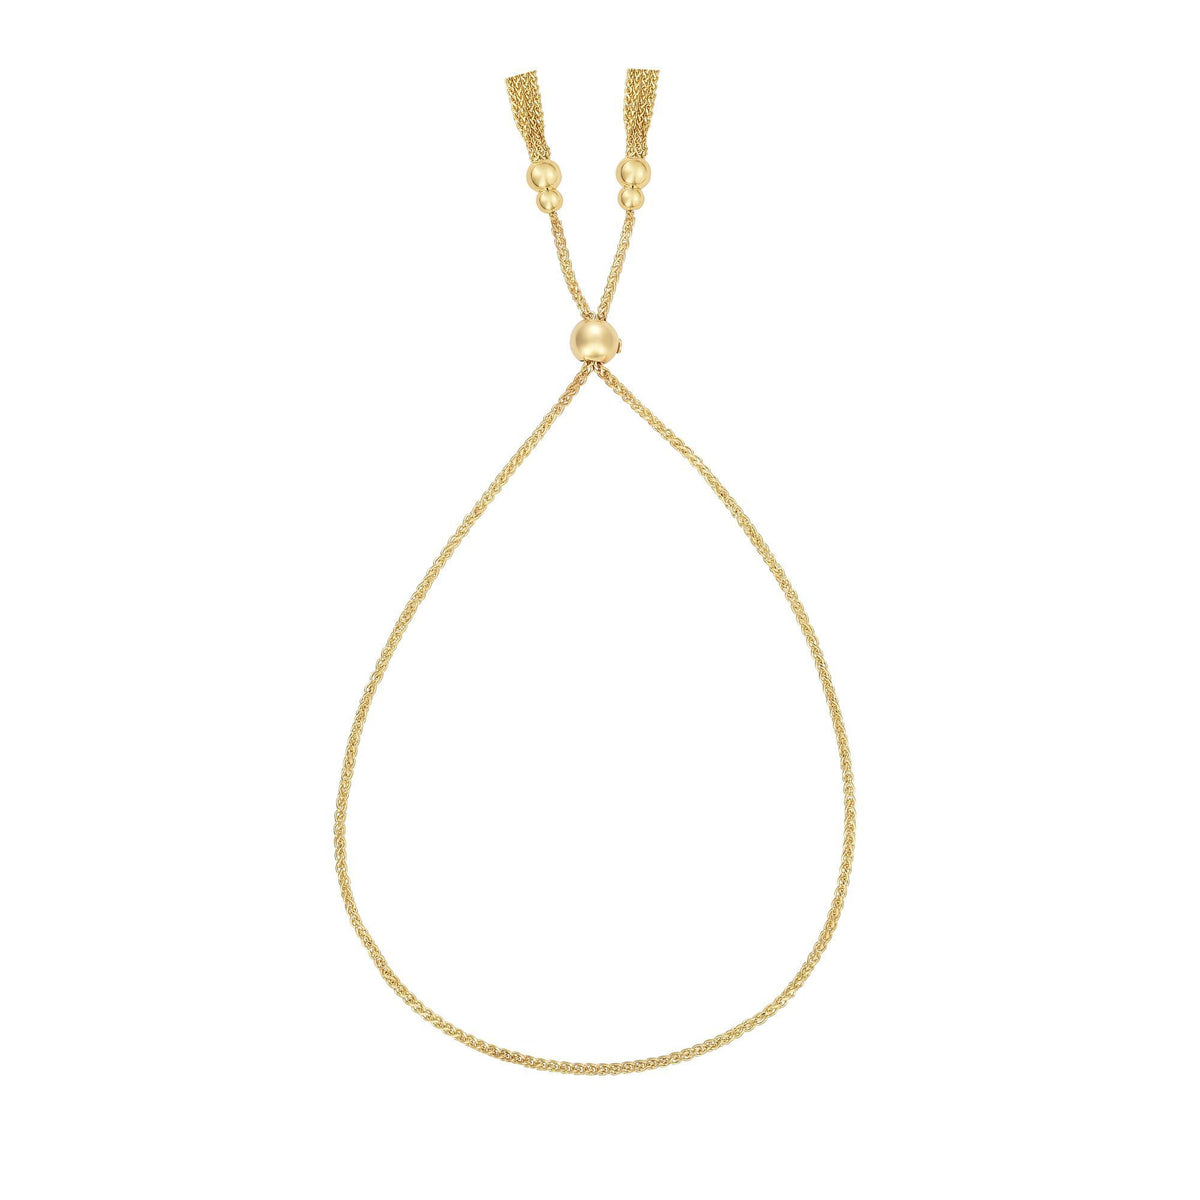 14k Yellow Gold Adjustable Chain Bolo Friendship Bracelet, 9.25" fine designer jewelry for men and women